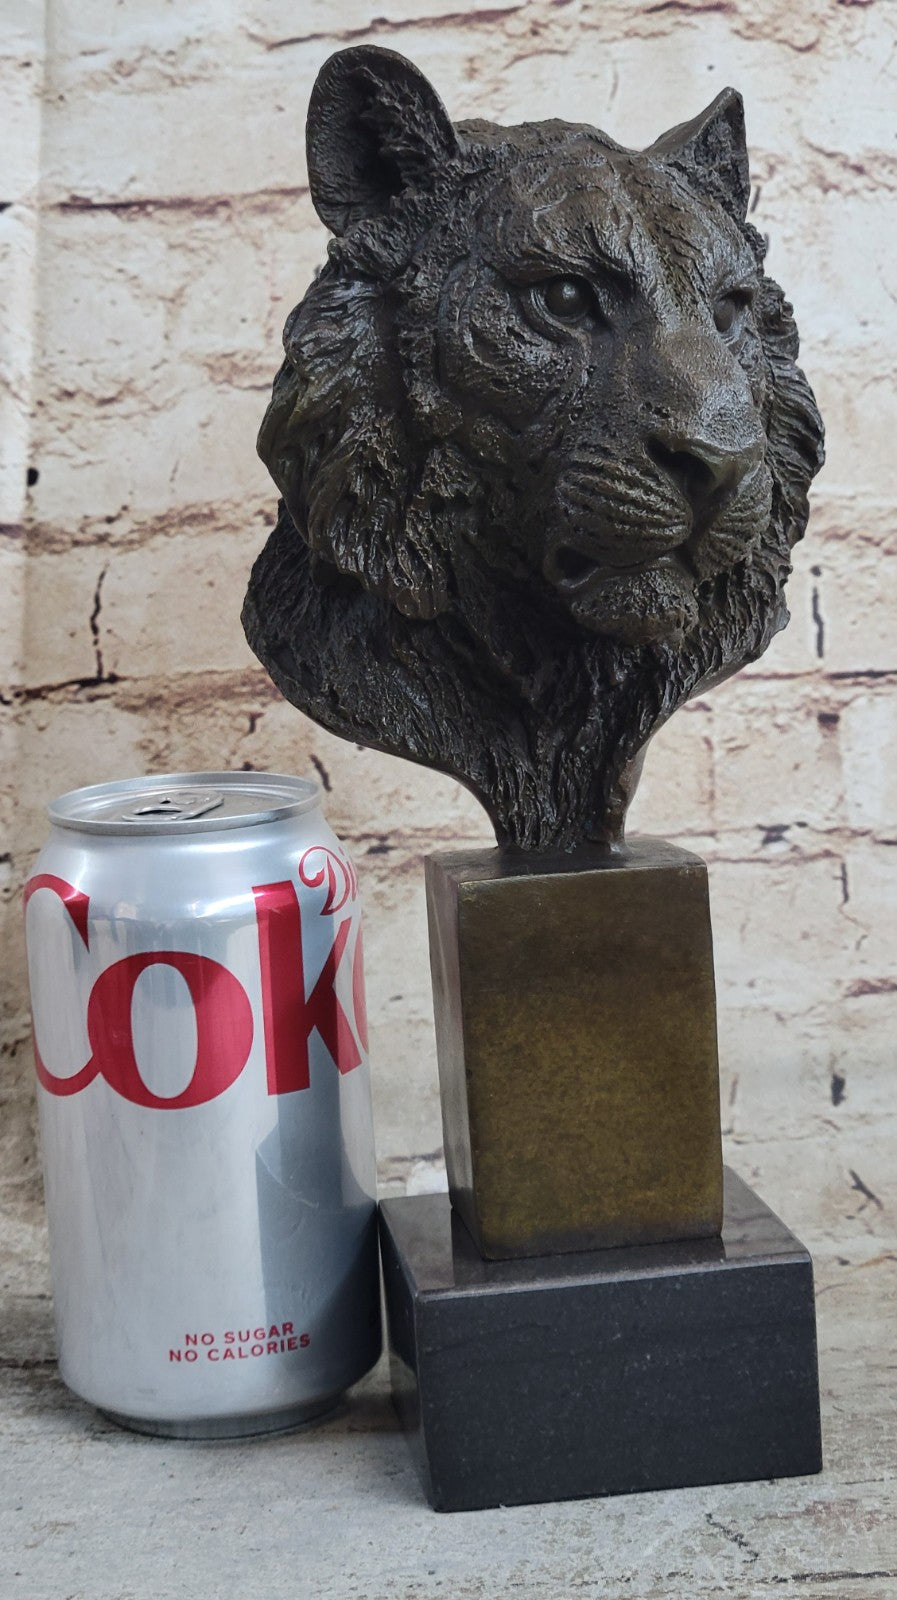 10" Western Art Deco Bronze lions Lion Puma Mountain Cat Bust Sculpture Figurine